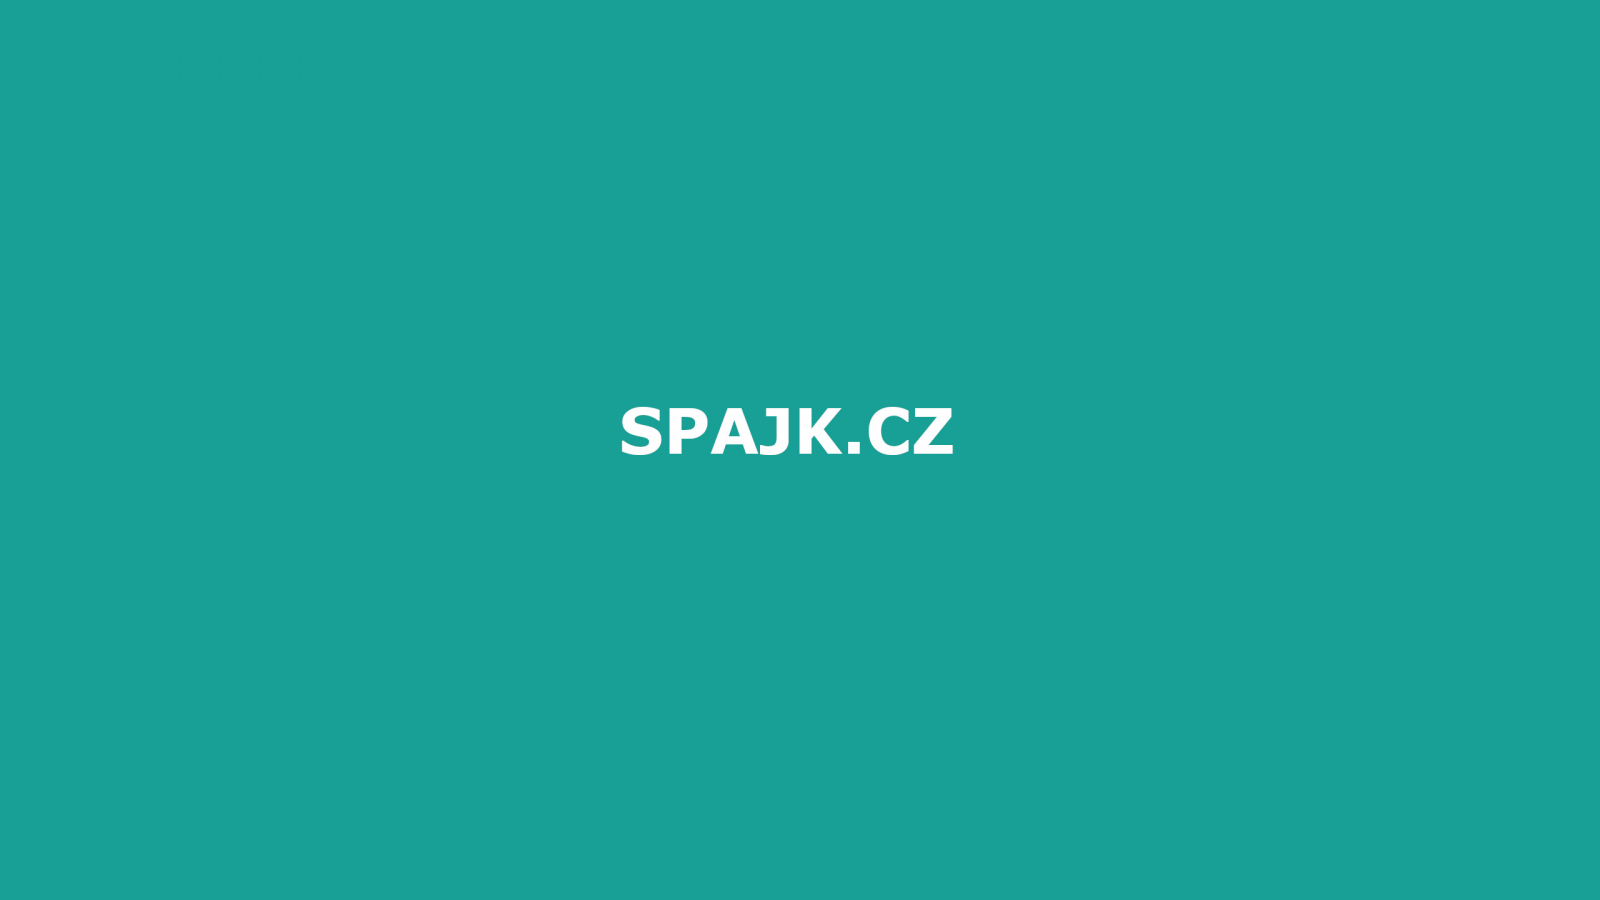 Spajk.cz